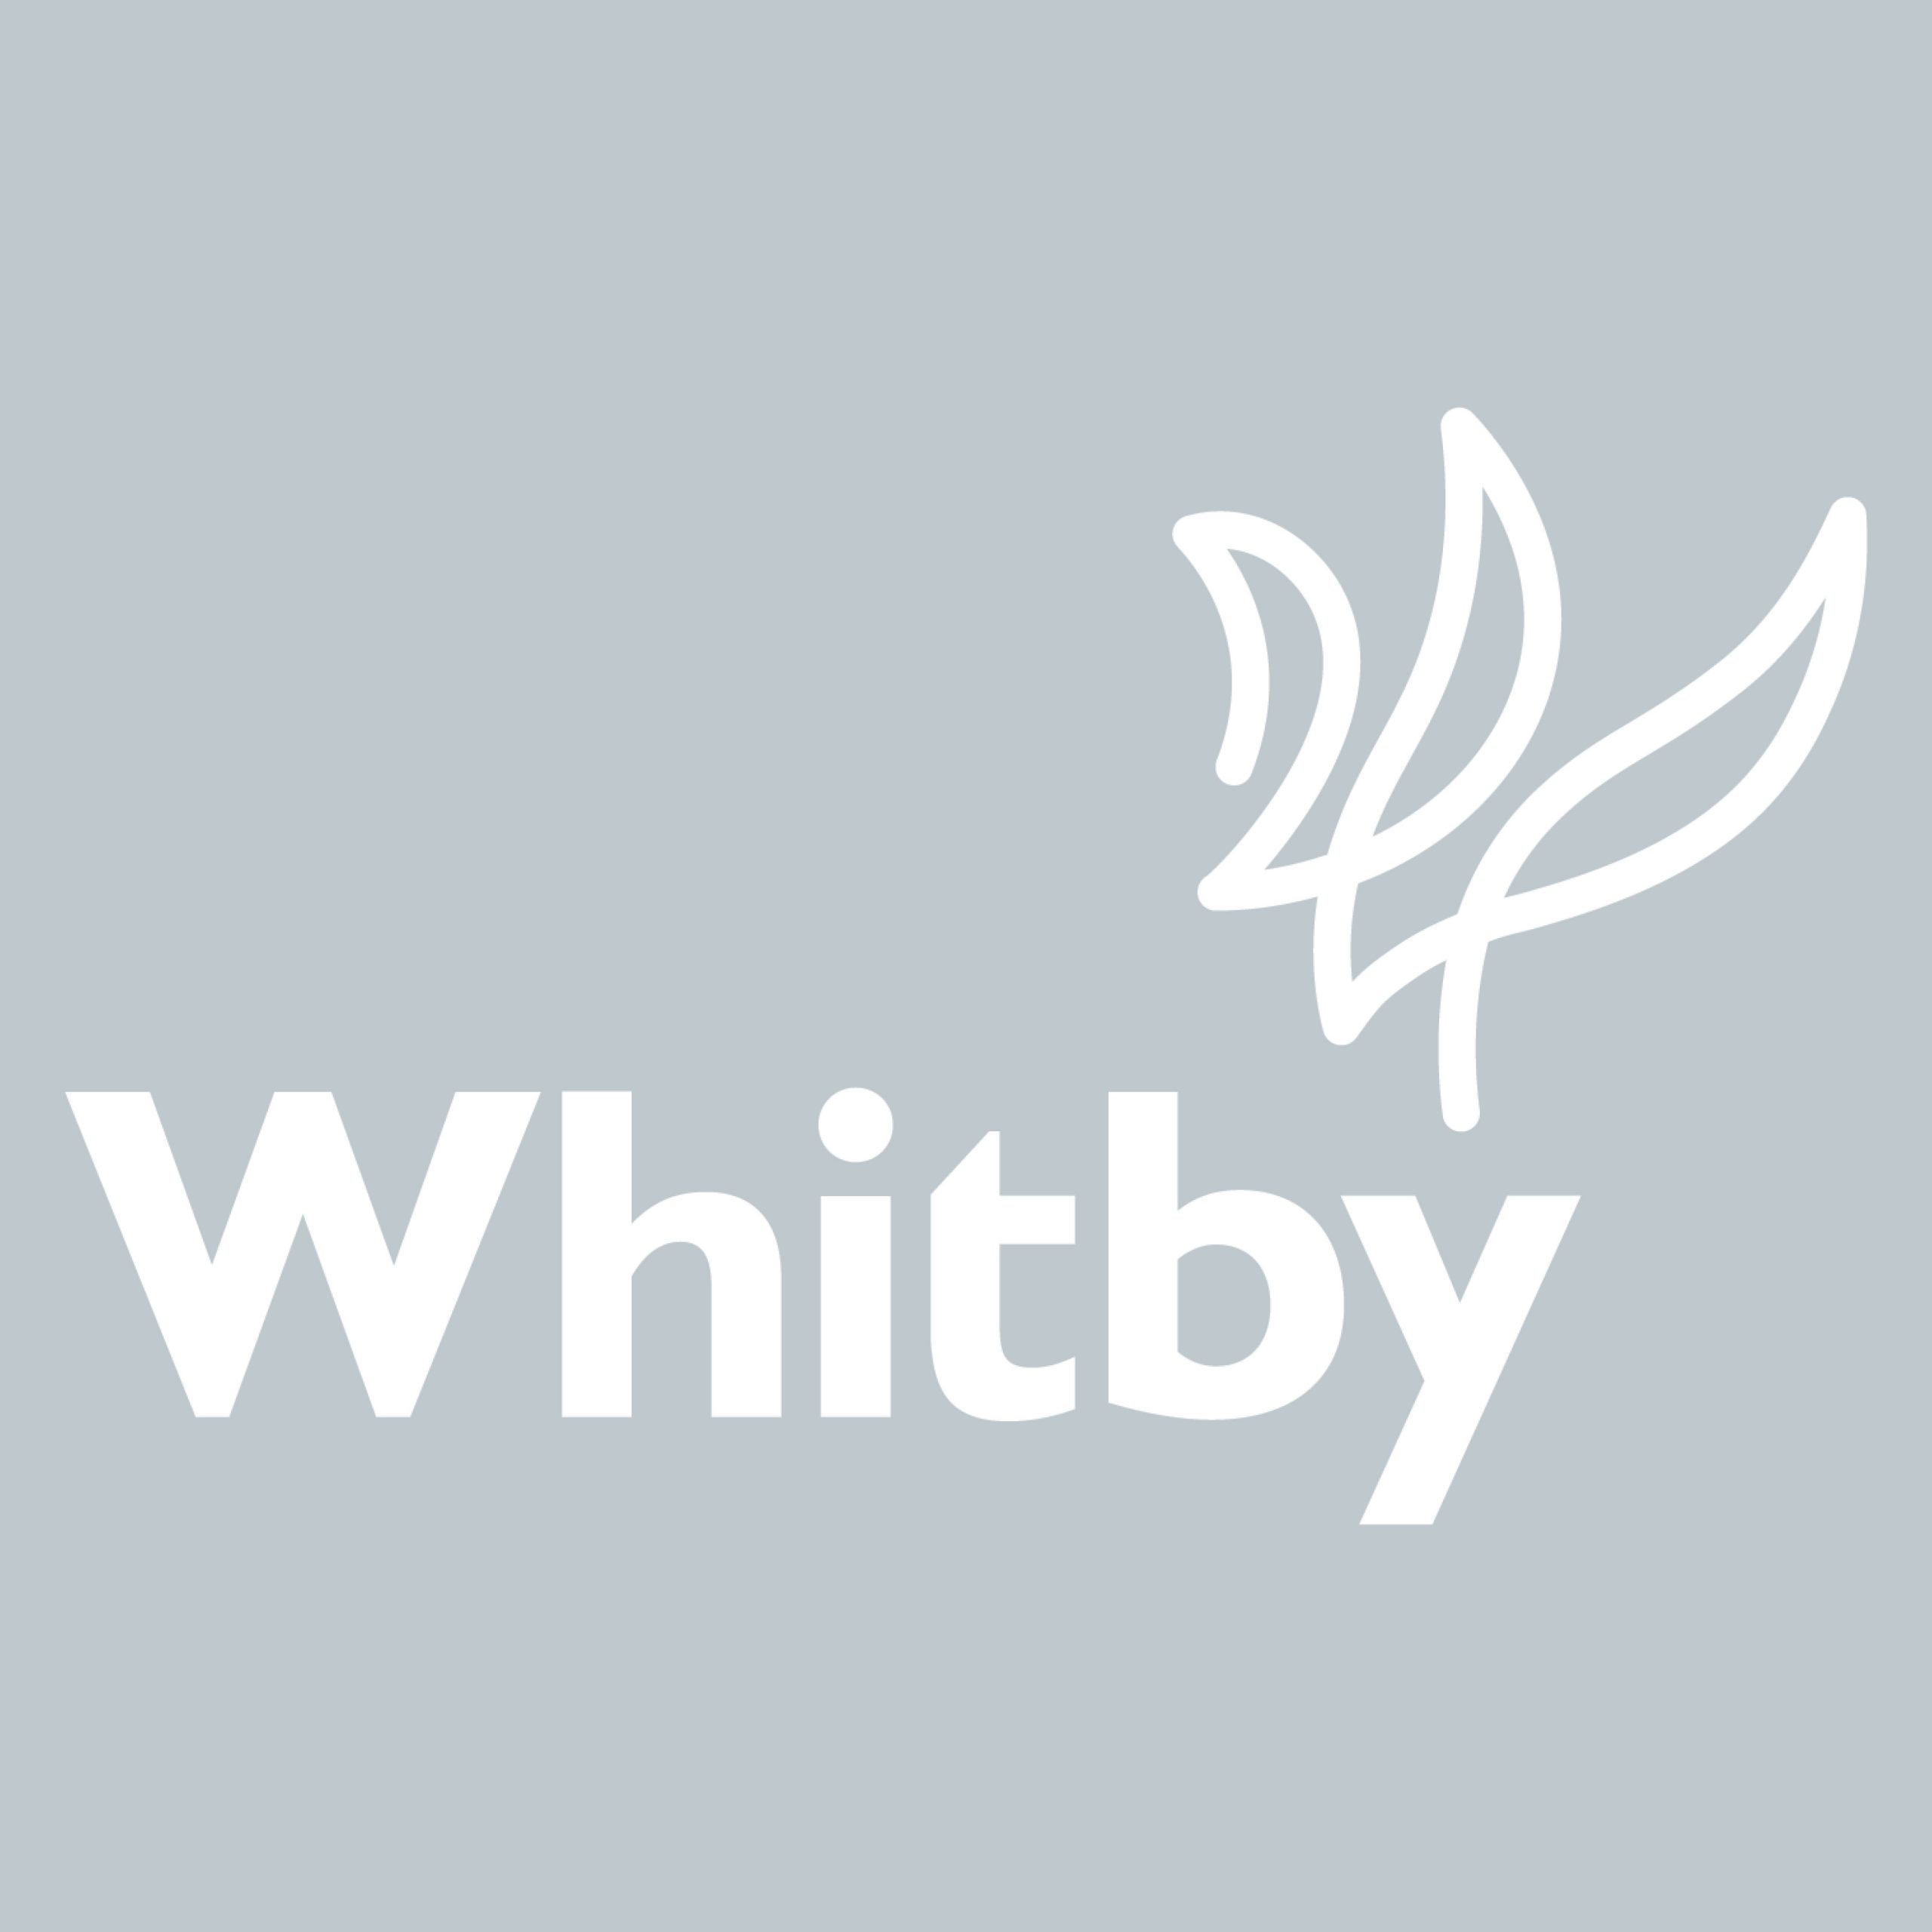 Town of Whitby logo